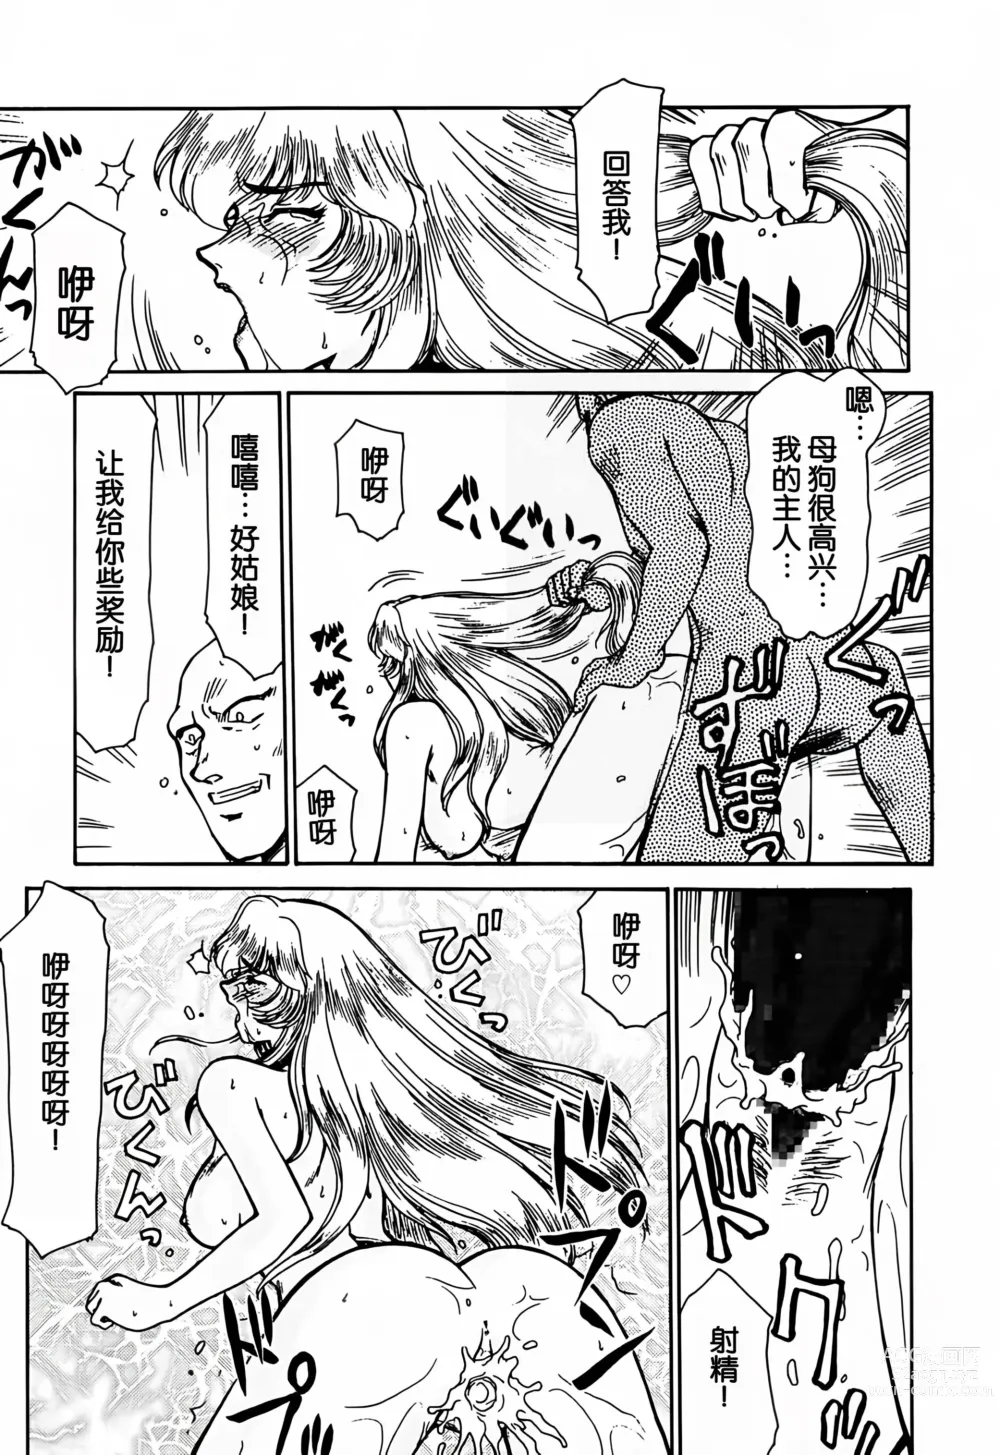 Page 60 of doujinshi Nise DRAGON BLOOD! 1.